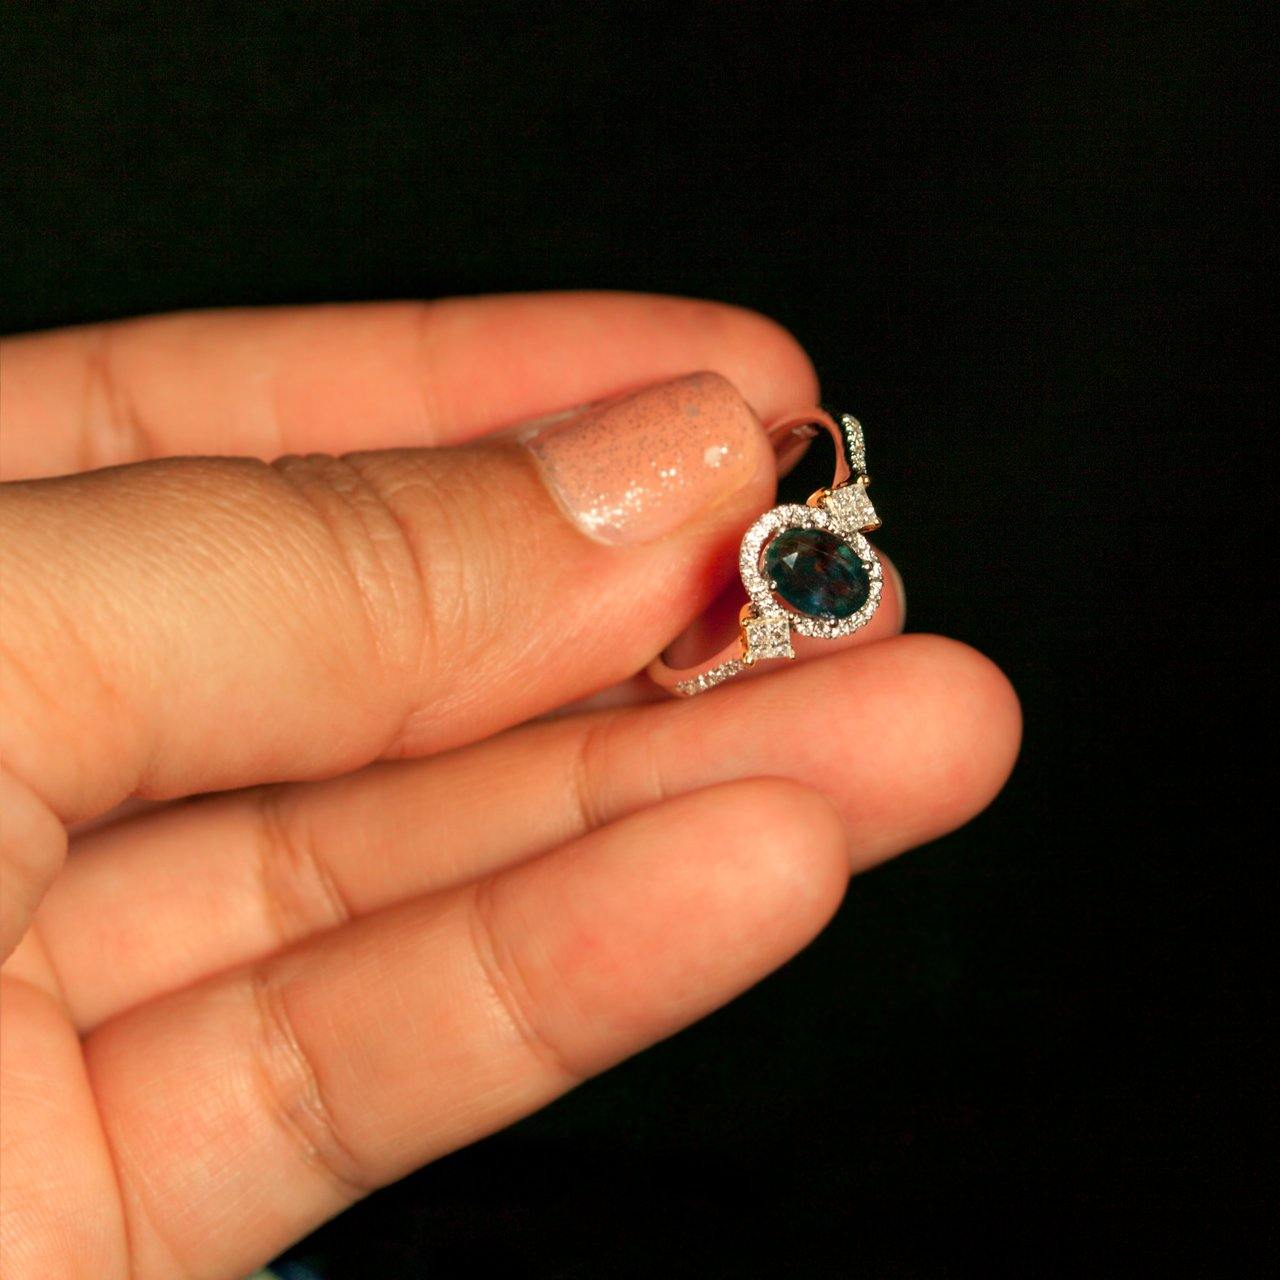 1.51ctw Super Rare 100% Color Change Natural Alexandrite Diamond 18k Gold Ring - The Alexandrite